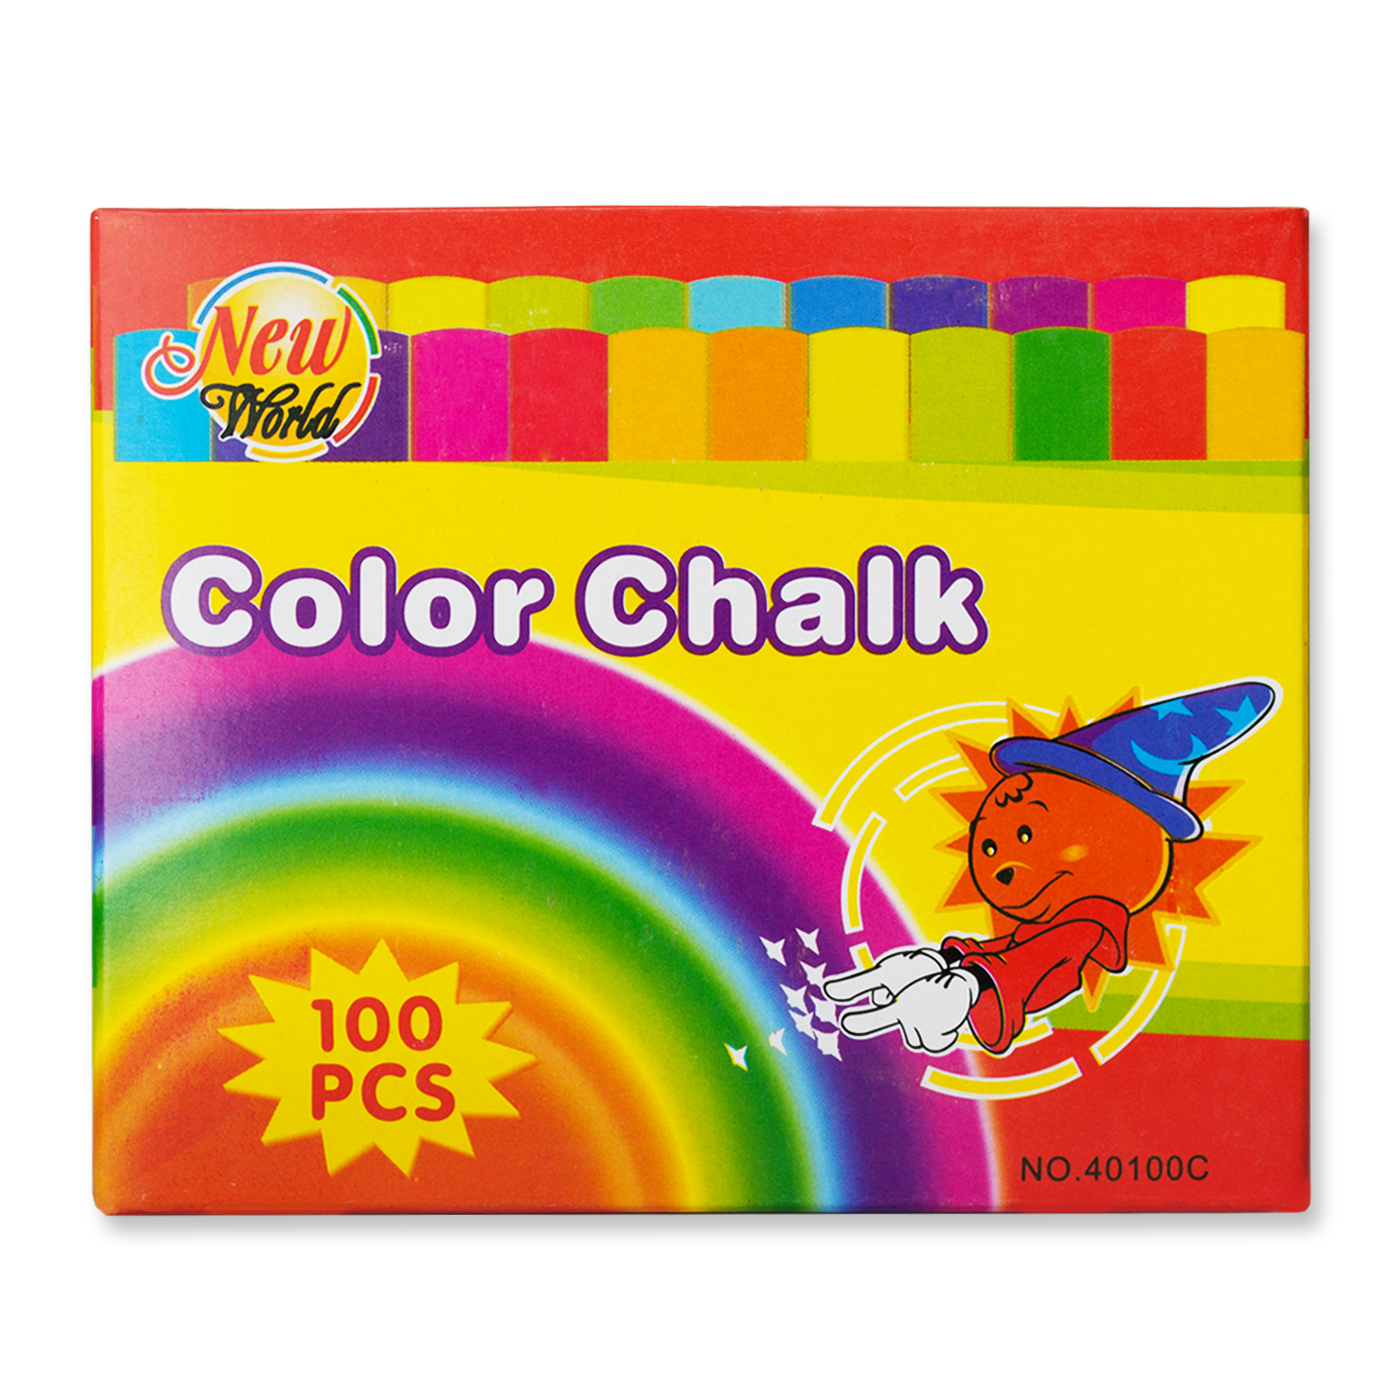 New World Coloured Chalk Box of 100